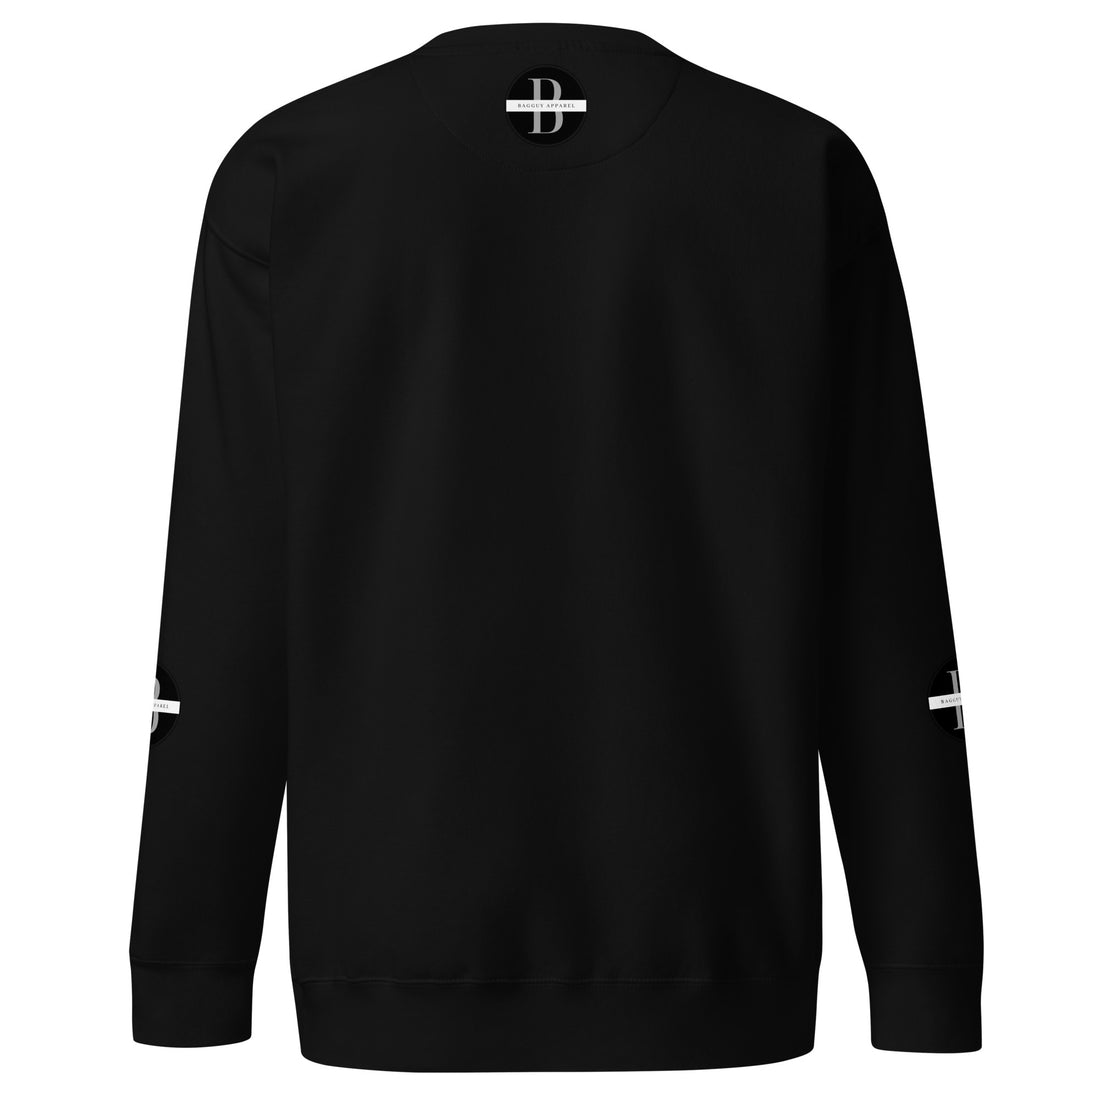 B Unisex Premium Sweatshirt